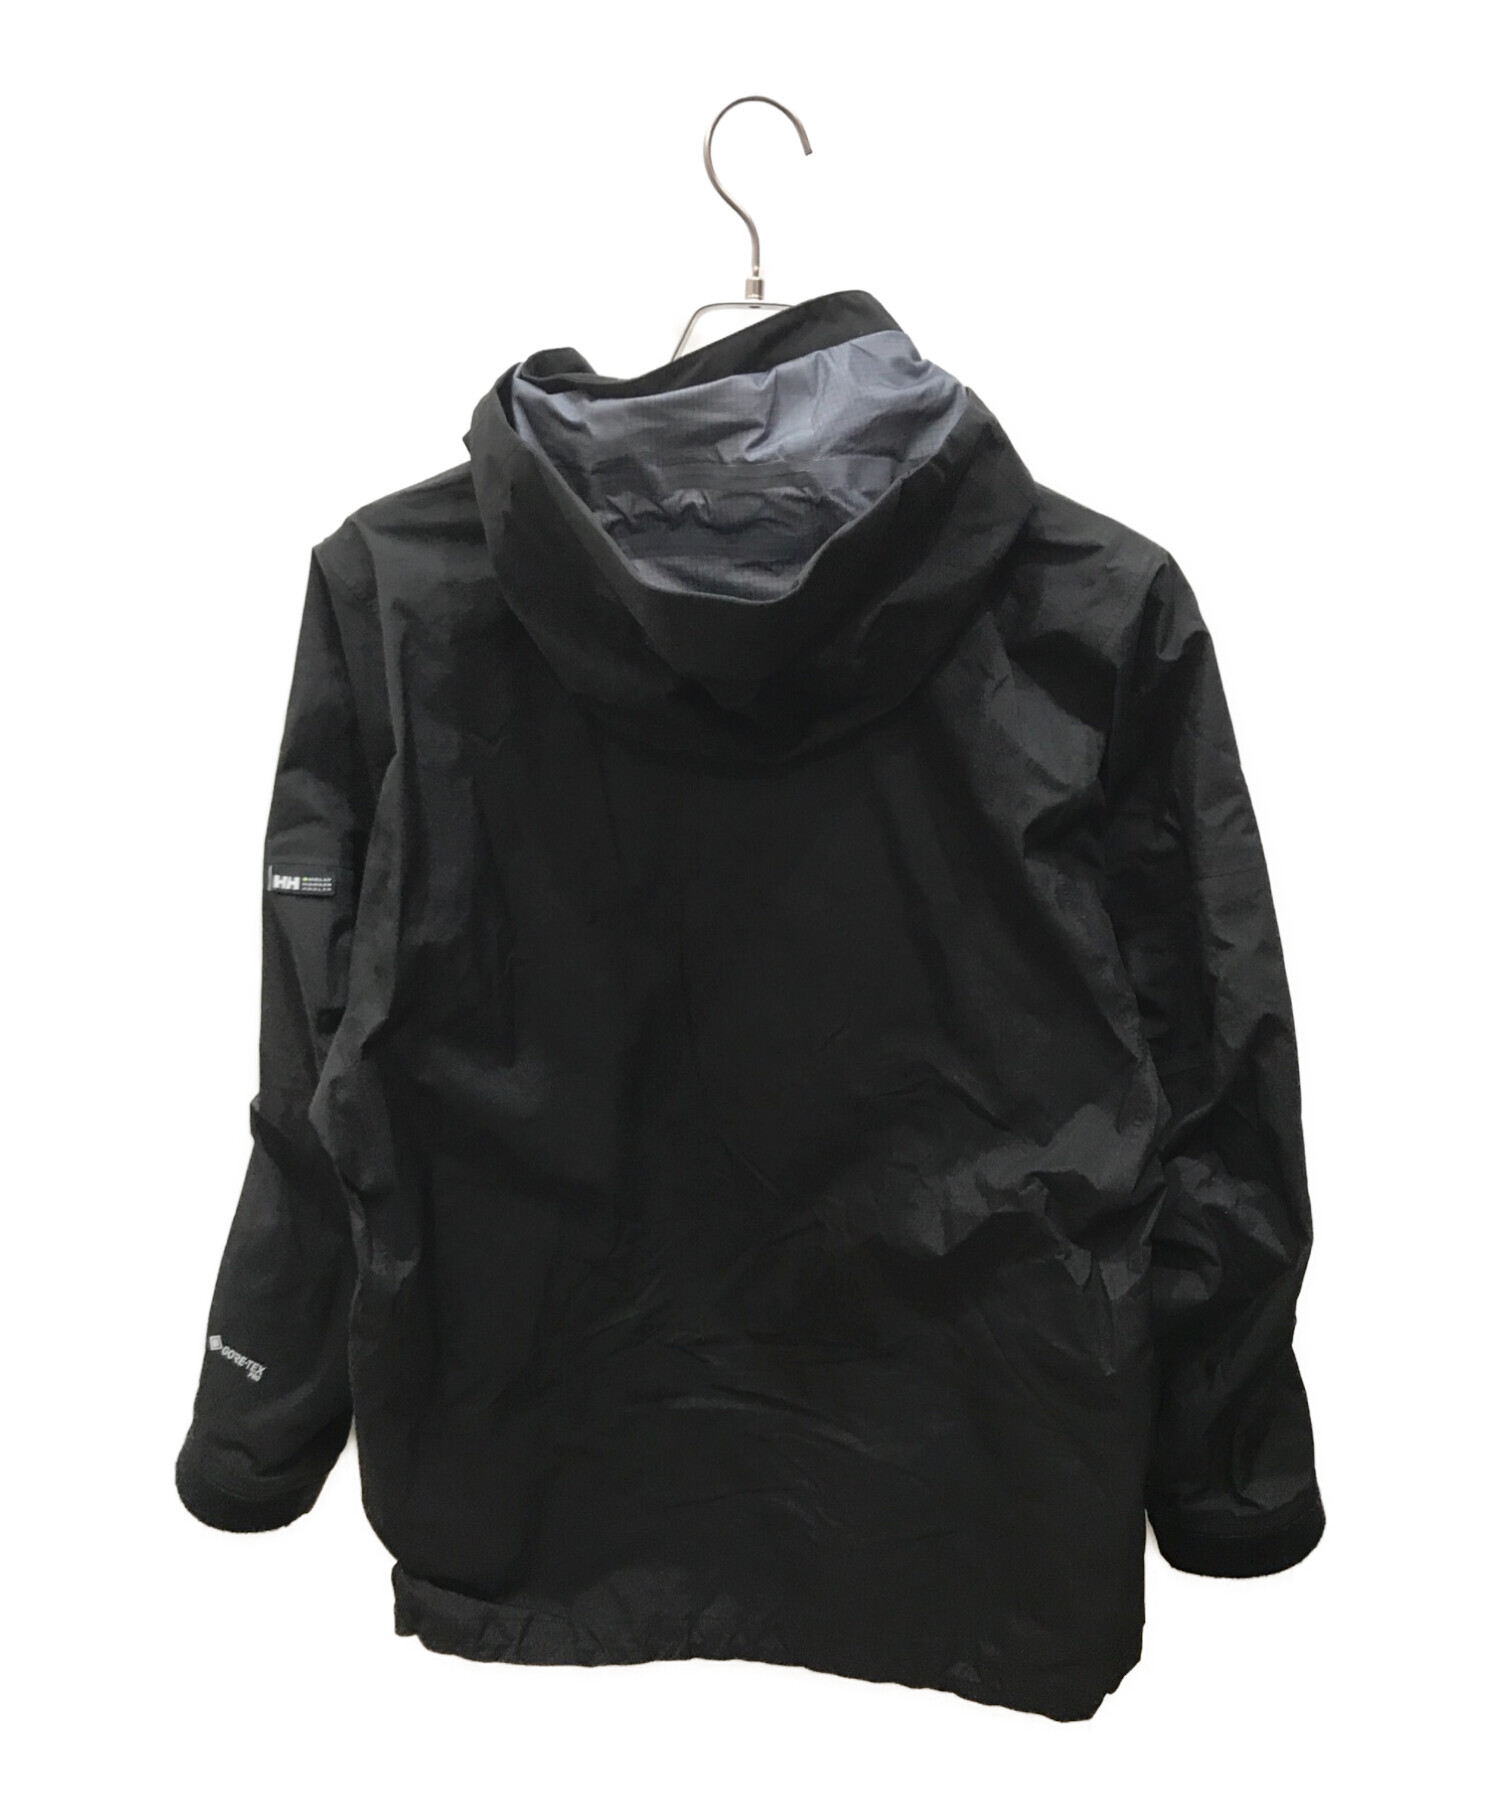 HELLY HANSEN (ヘリーハンセン) Attractor GTX-Pro Jacket/アトラクターゴアテックスプロジャケット ブラック  サイズ:L